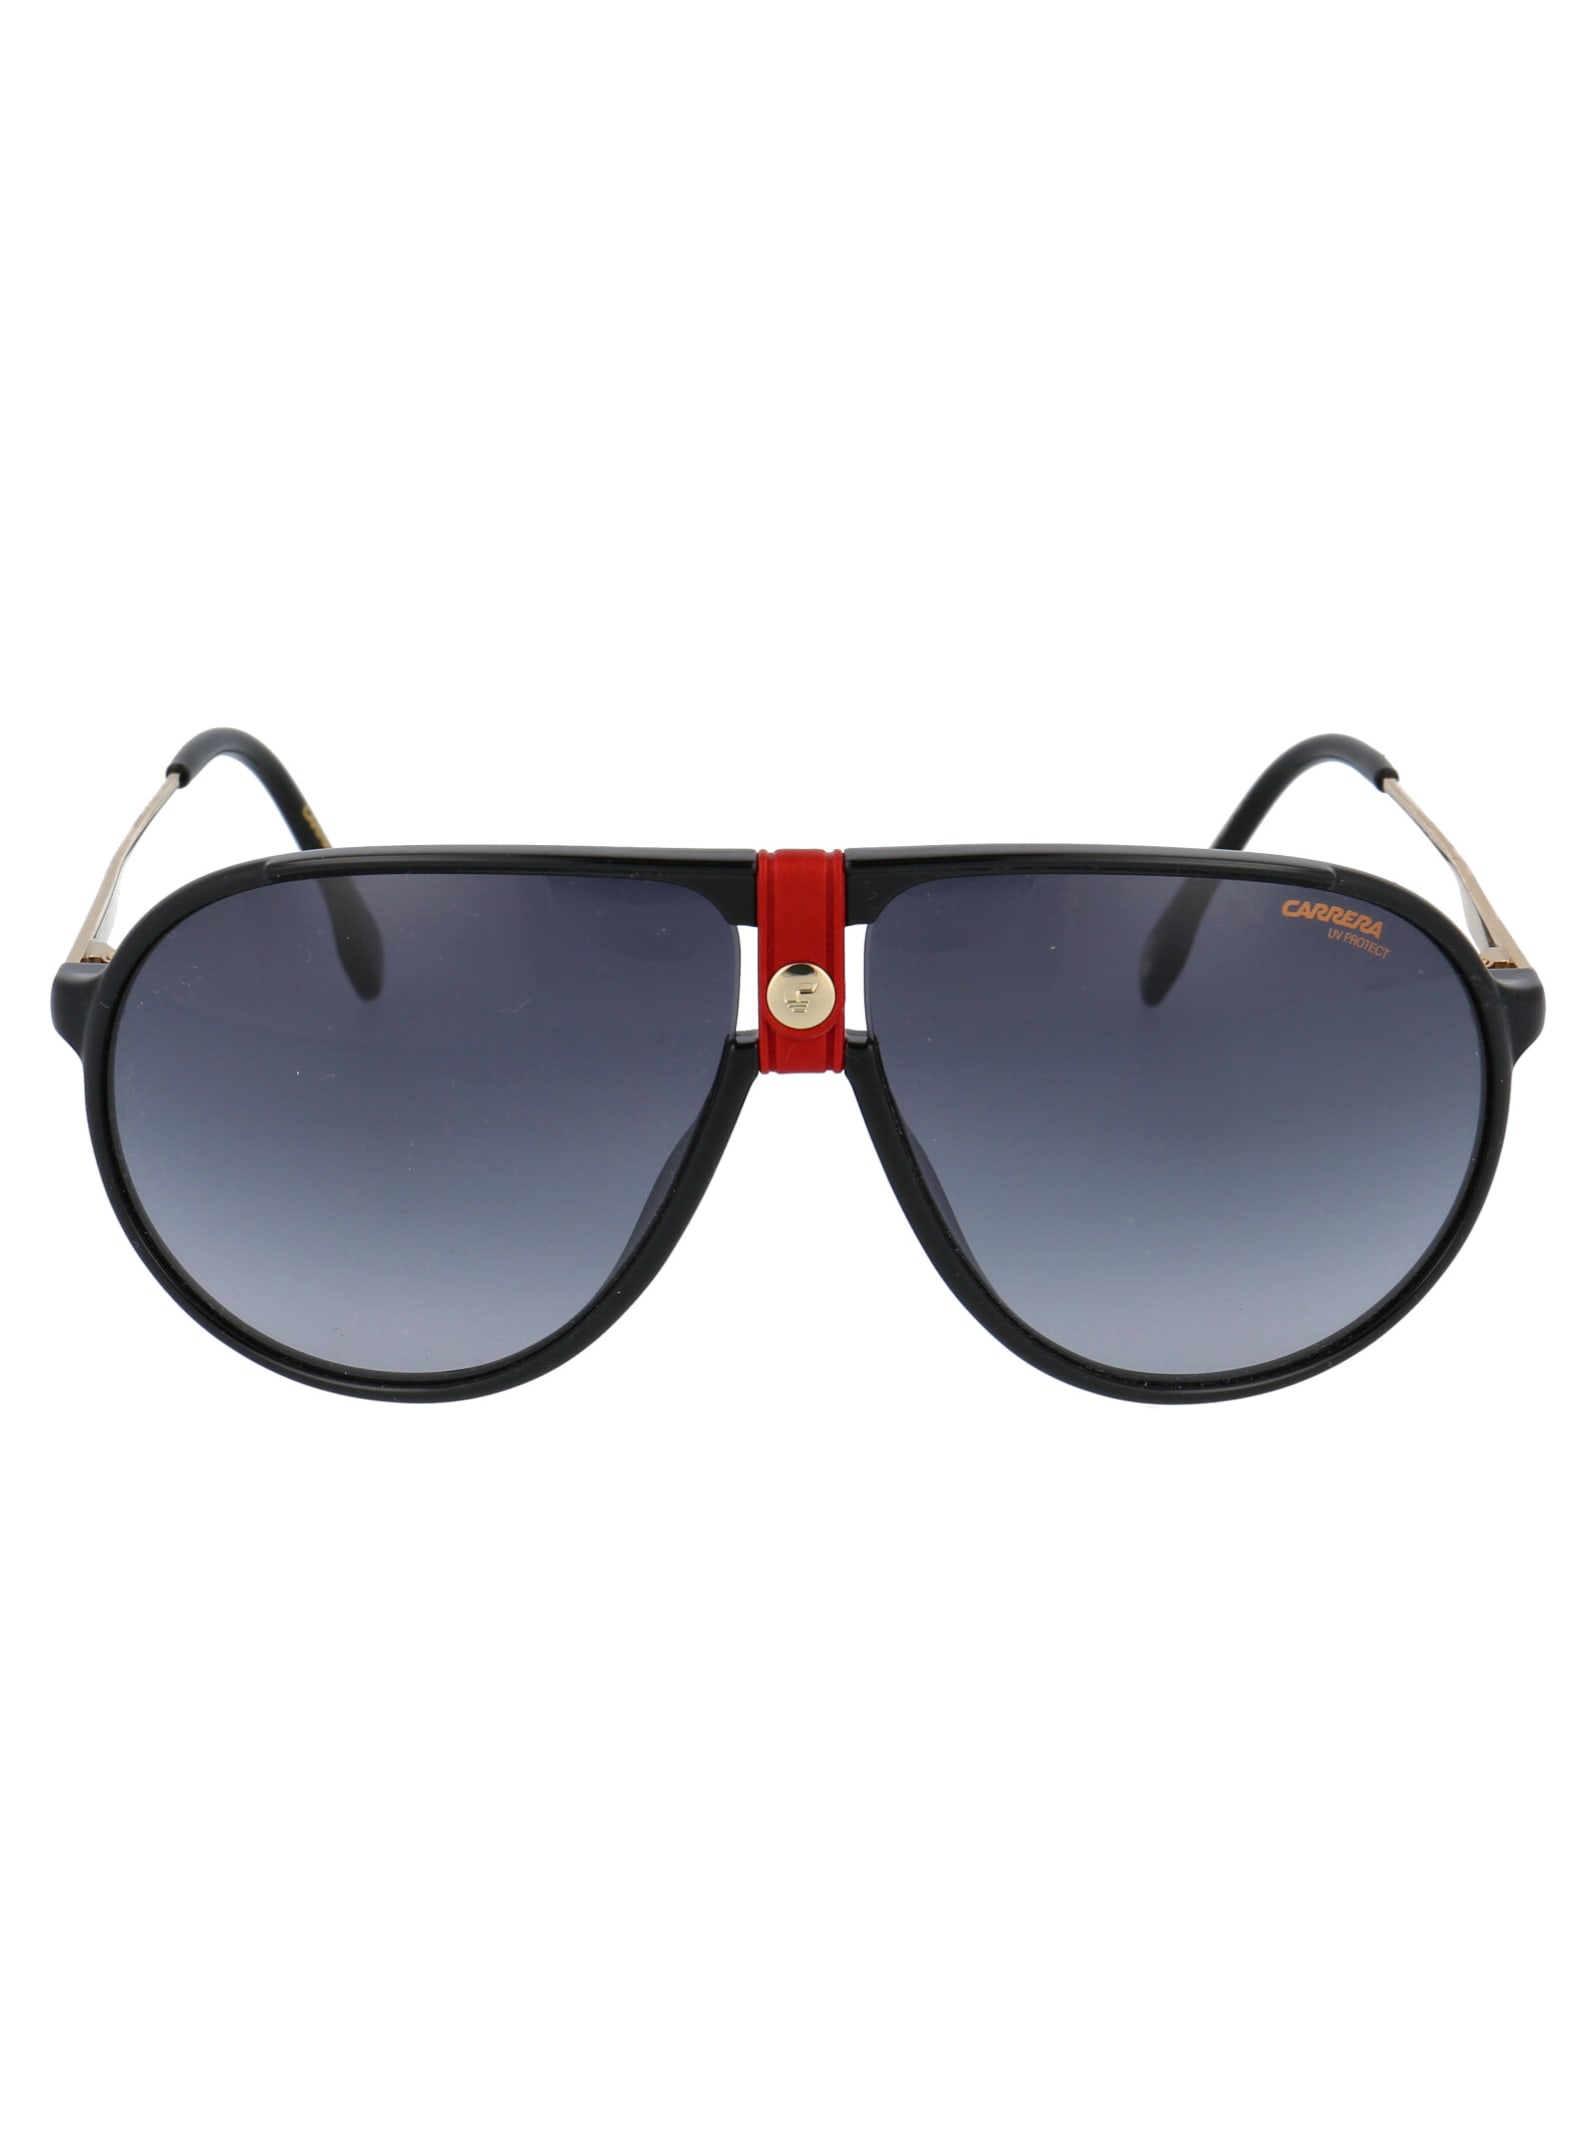 Carrera 1034/s Sunglasses